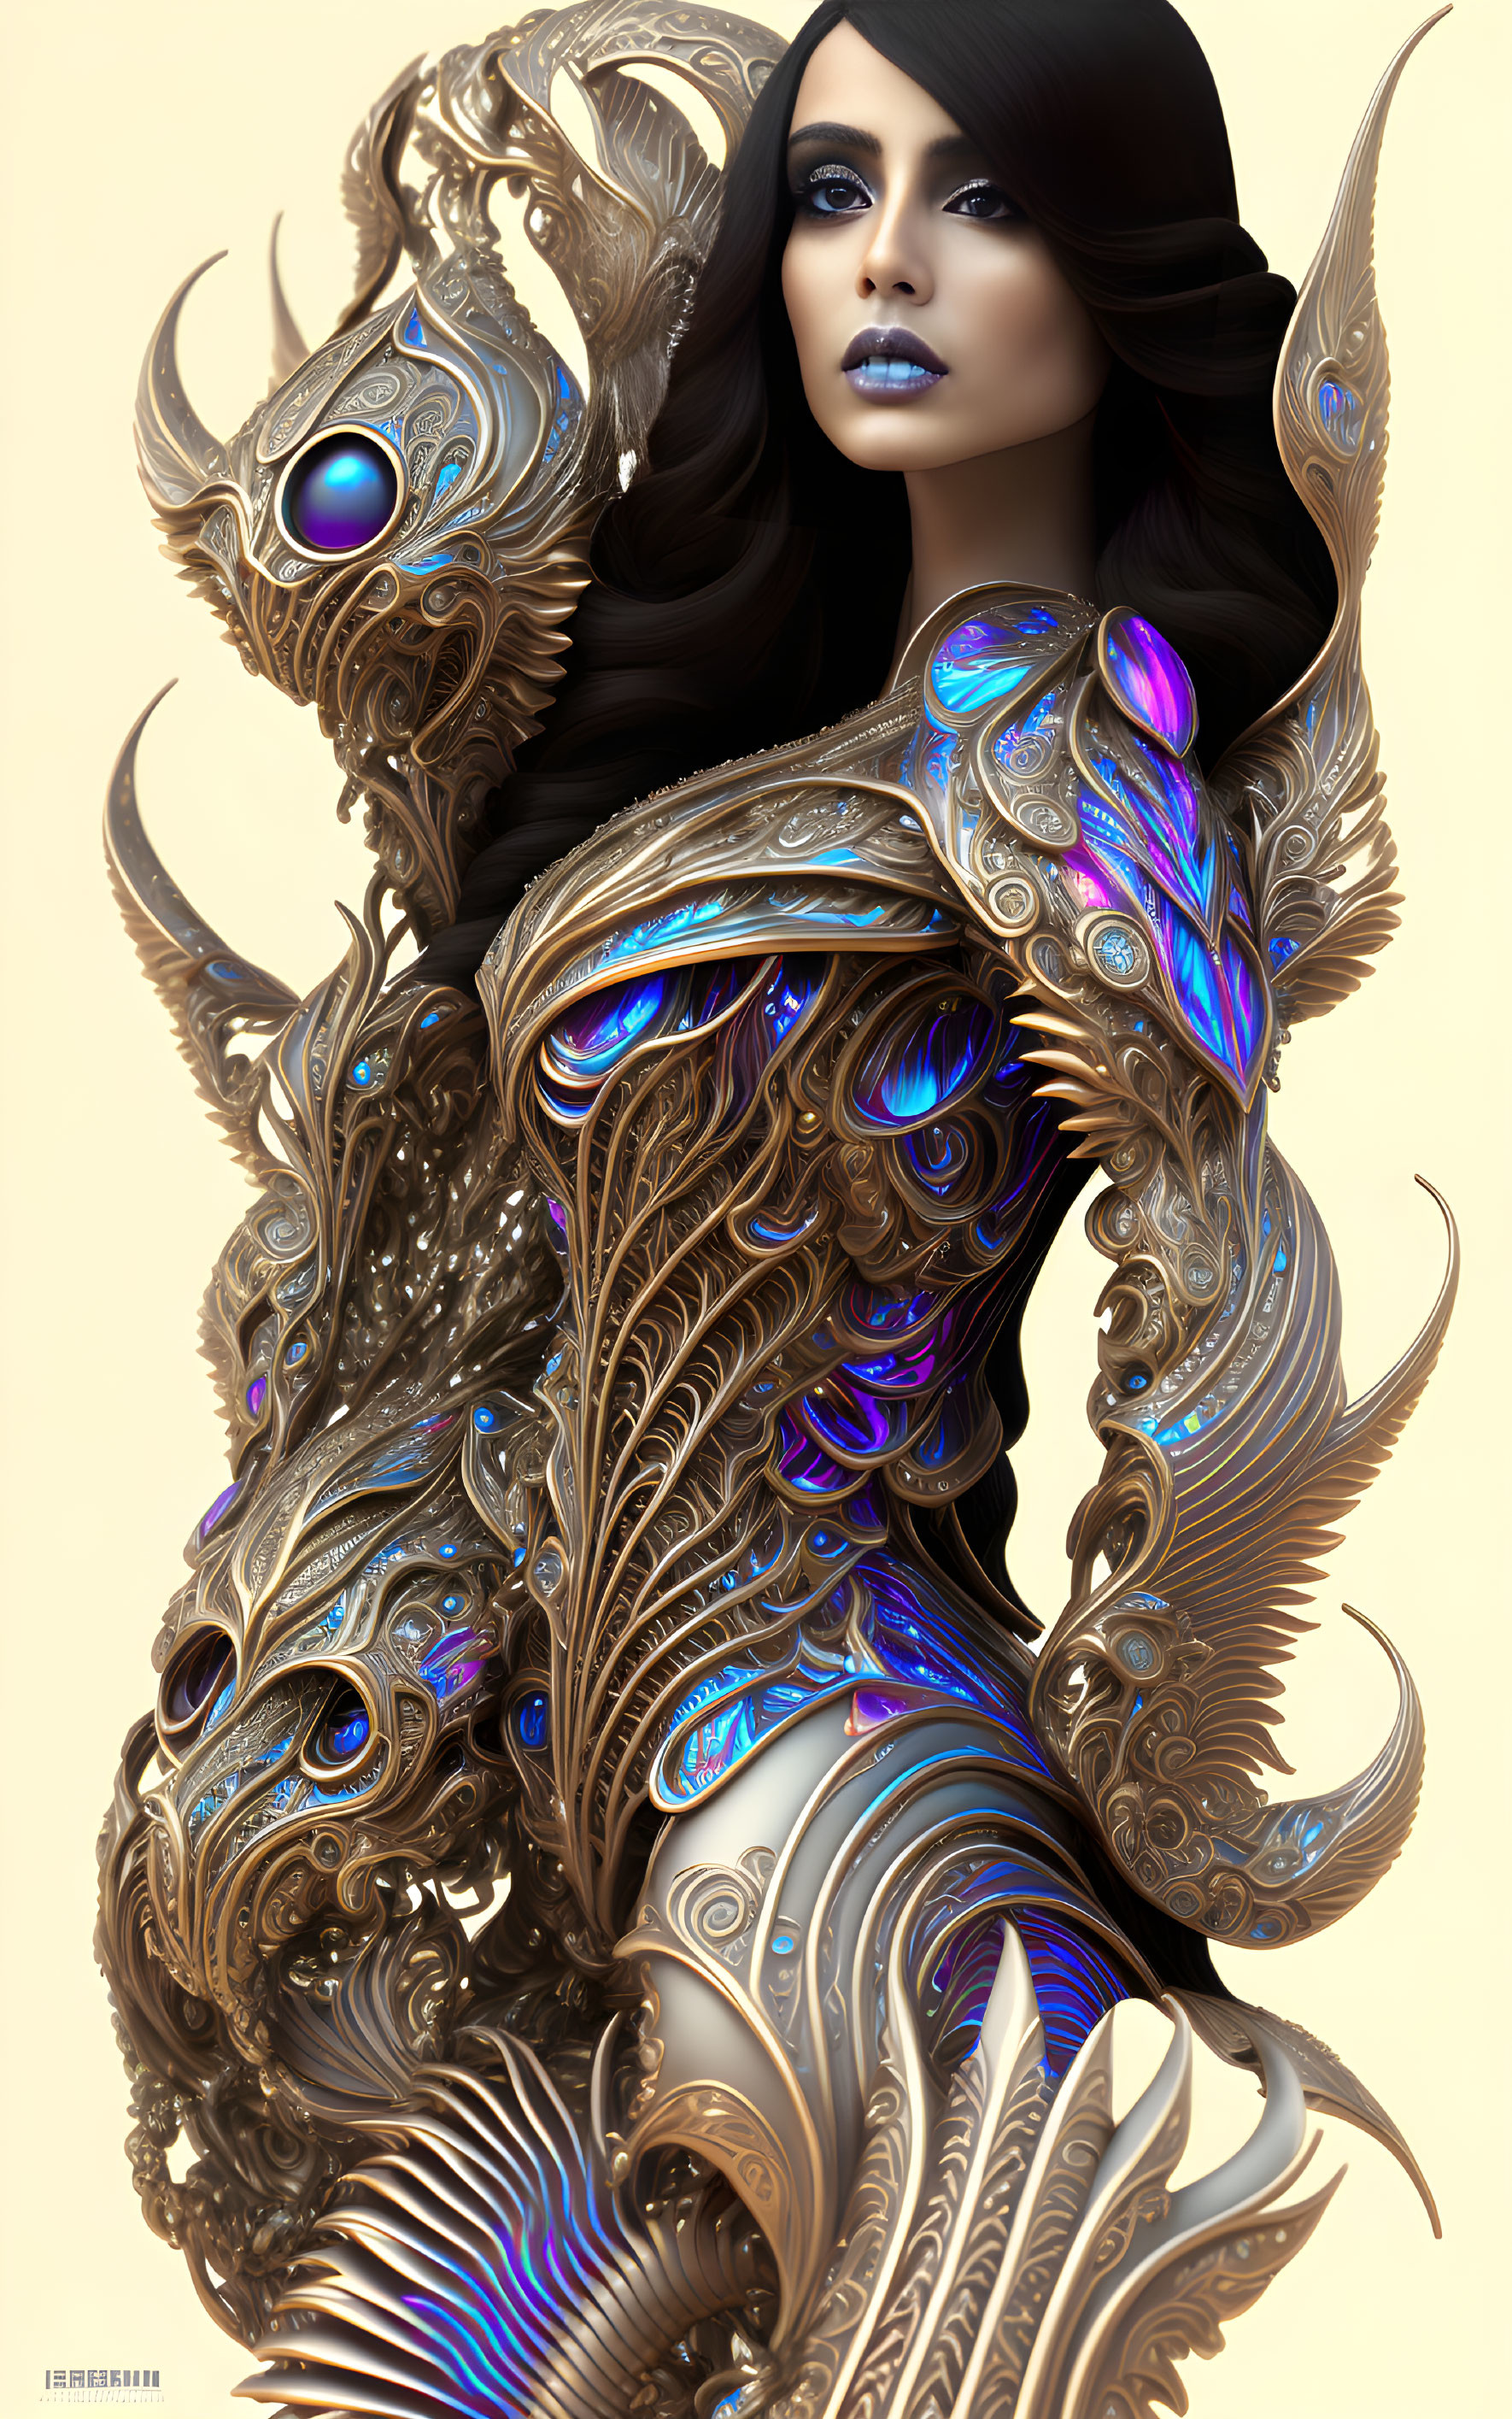 Digital artwork of a woman in ornate metal armor with blue gemstones